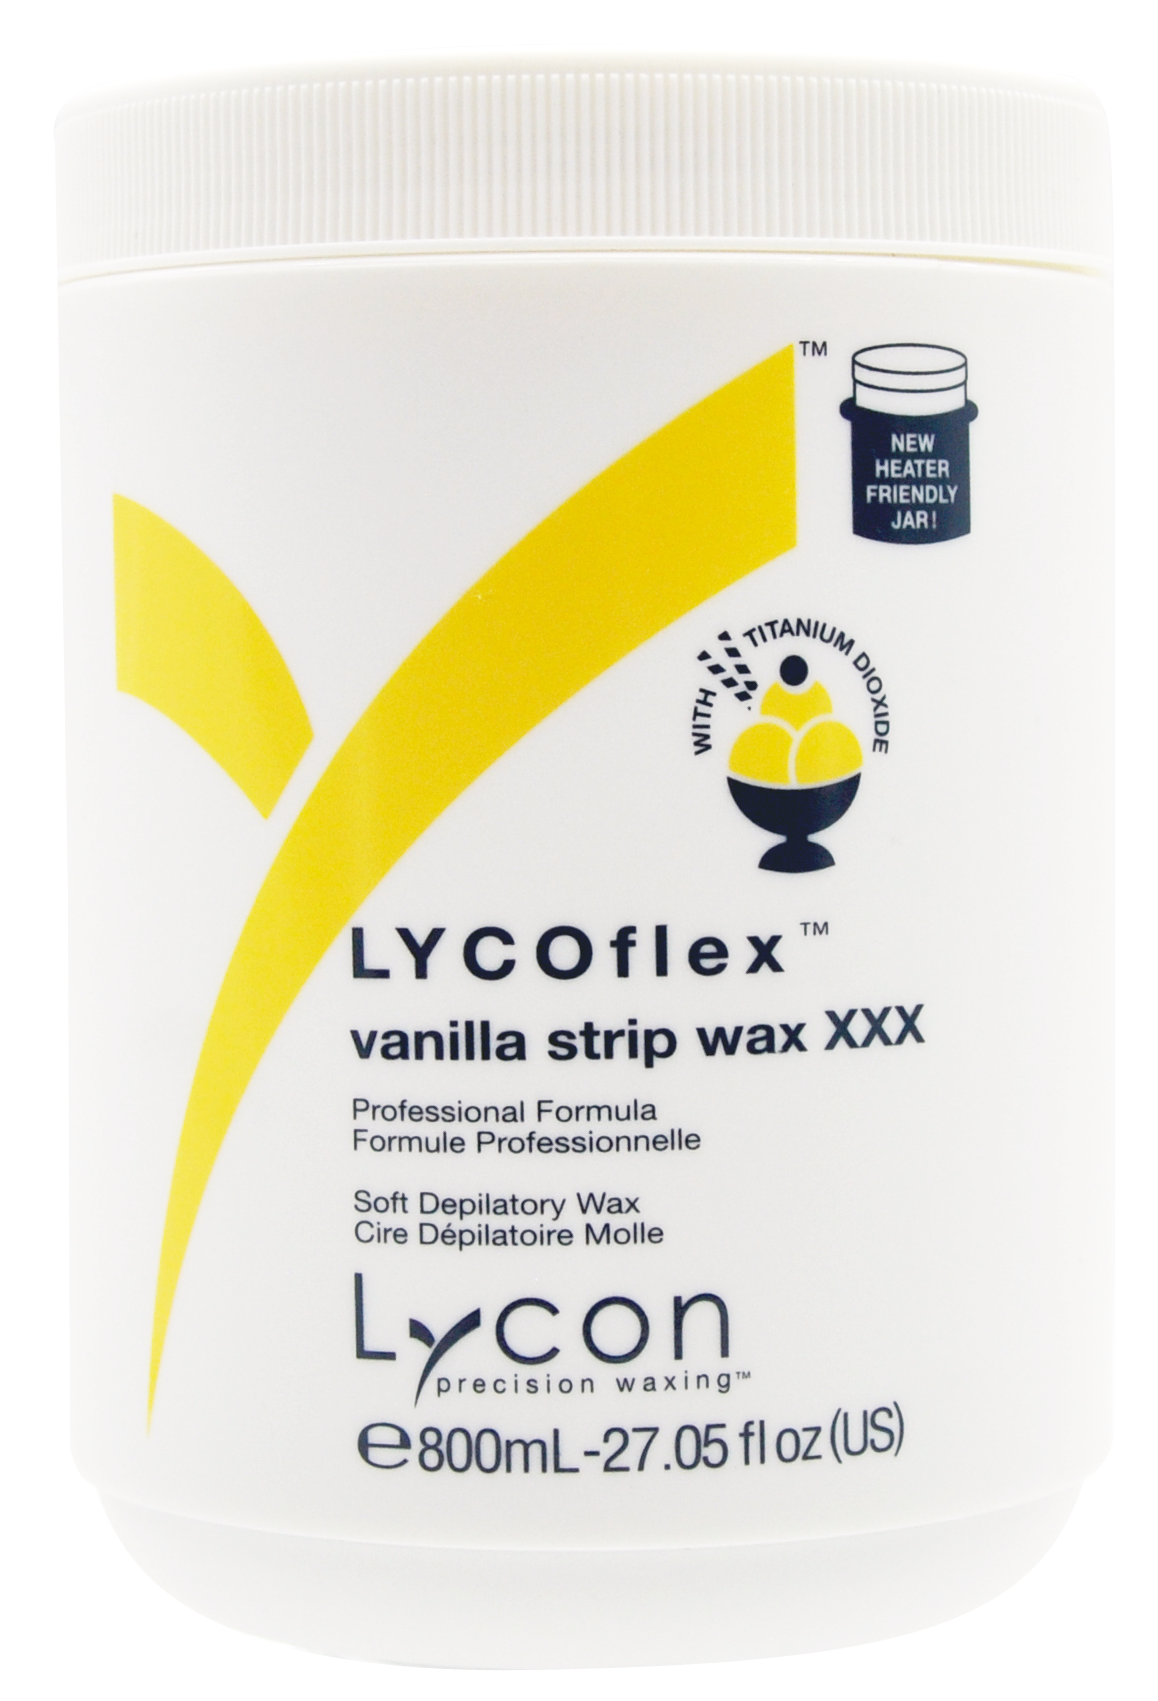 Lycoflex Vanilla Strip Wax